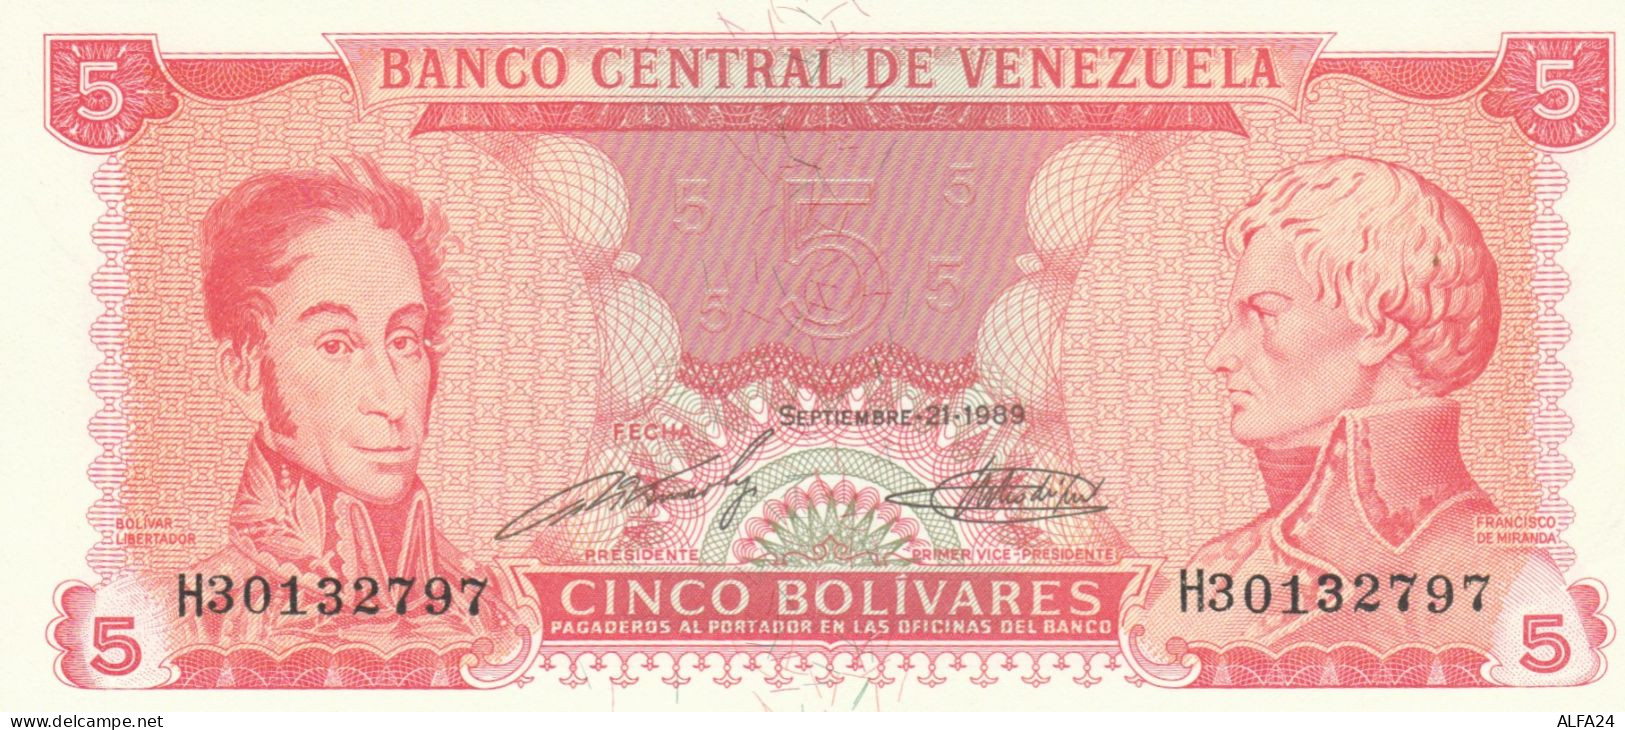 BANCONOTA VENEZUELA 5 UNC (RY2720 - Venezuela